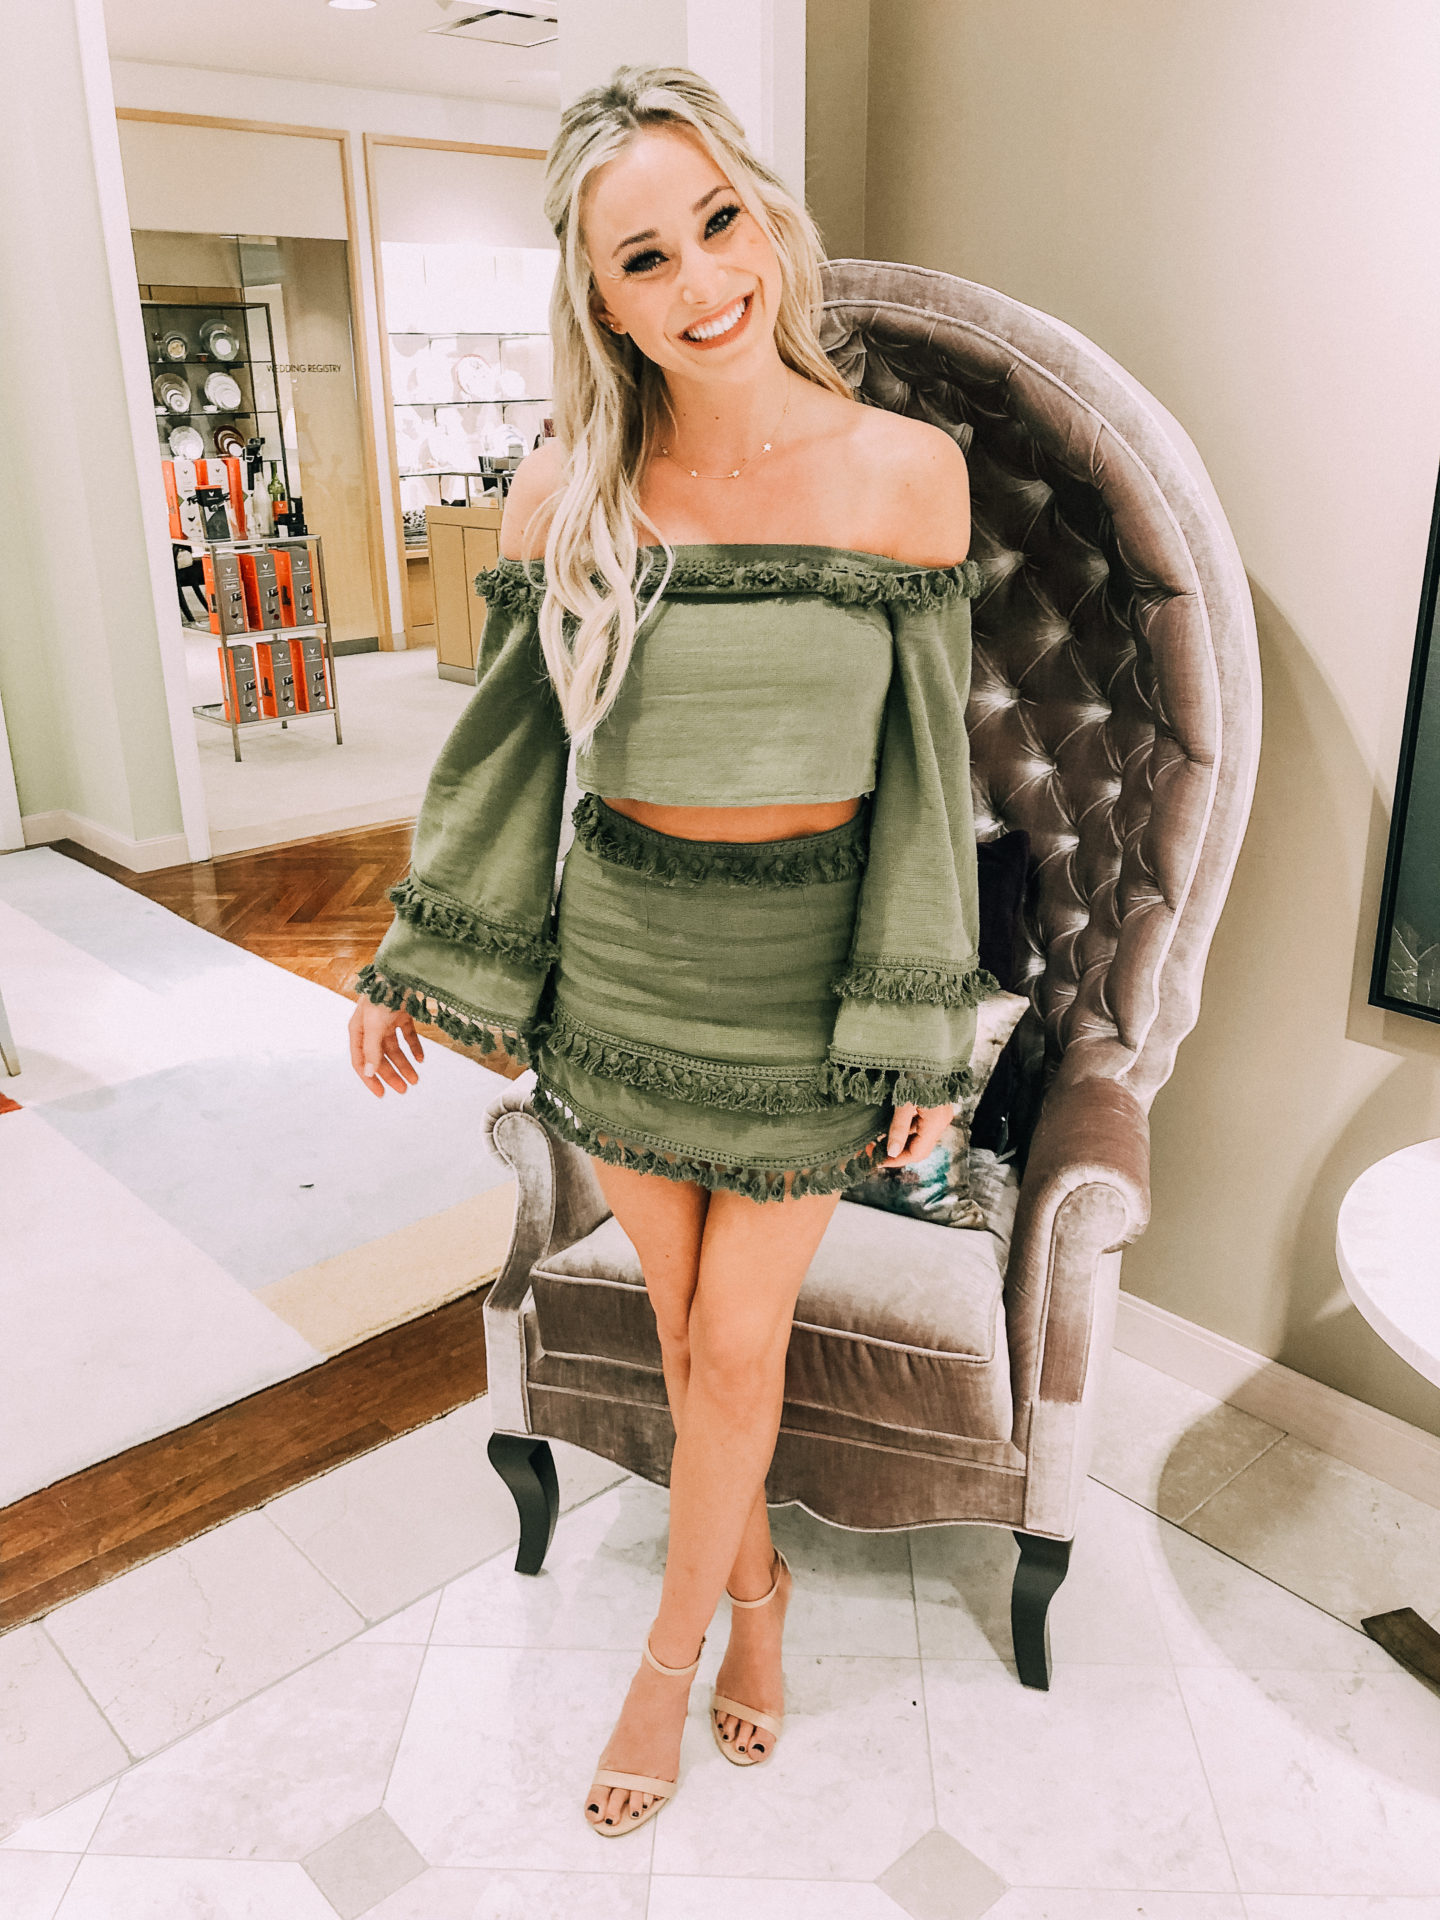 Dallas Fashion Model, Fashion & Lifestyle Blogger - Peyton Mabry